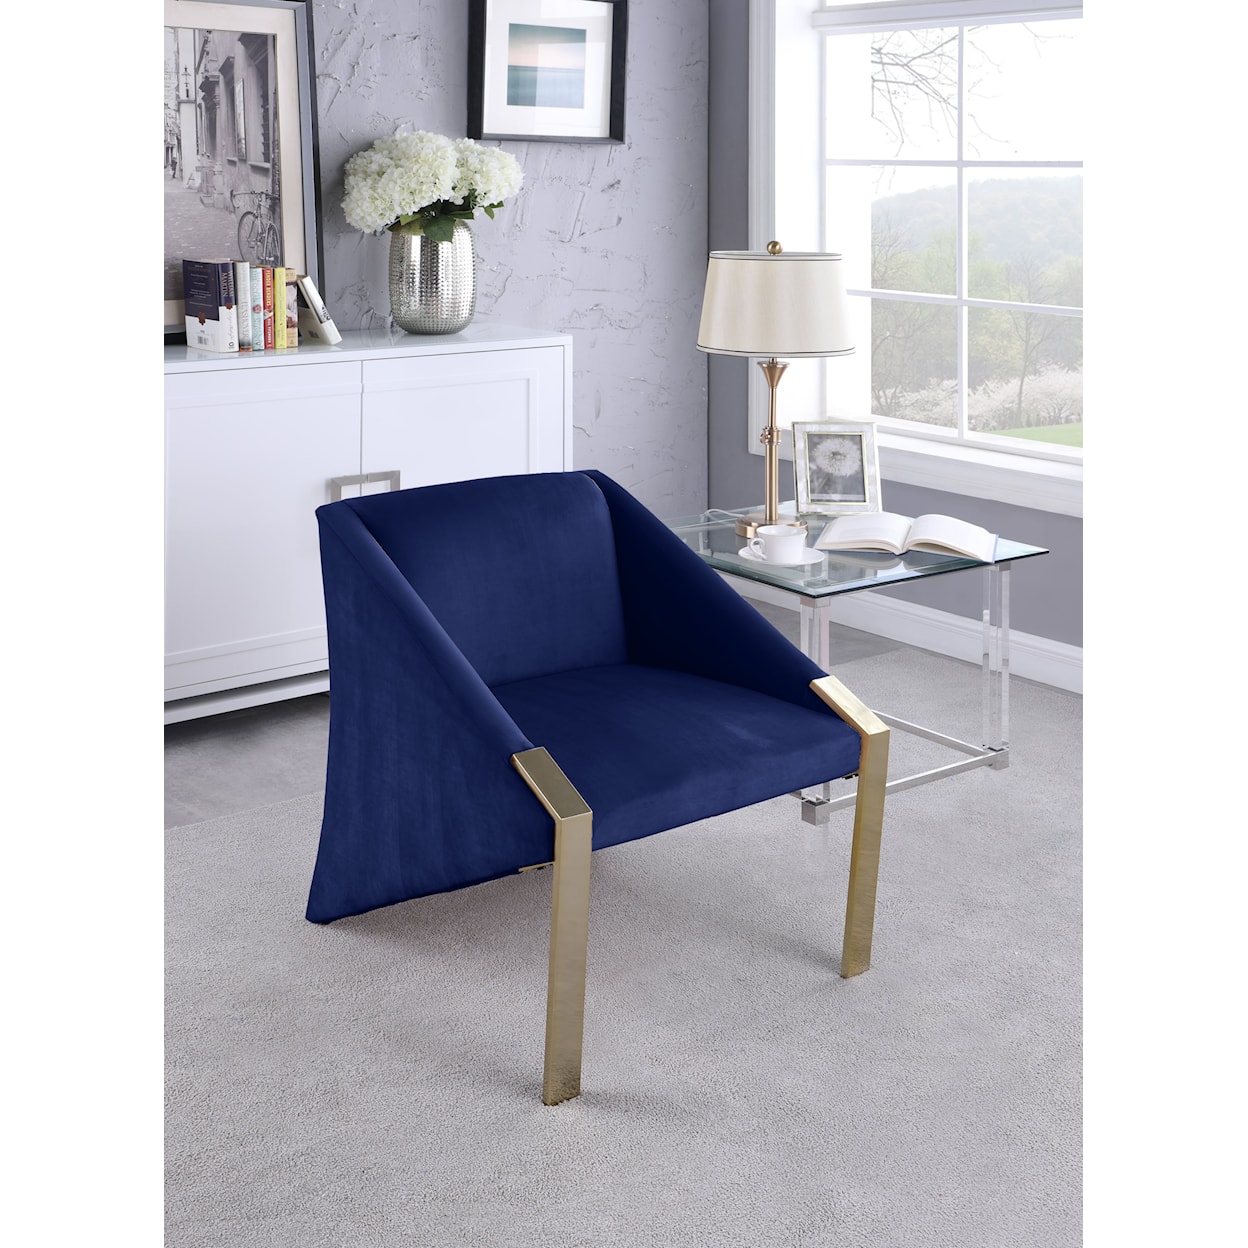 Meridian Furniture Rivet Accent Chair